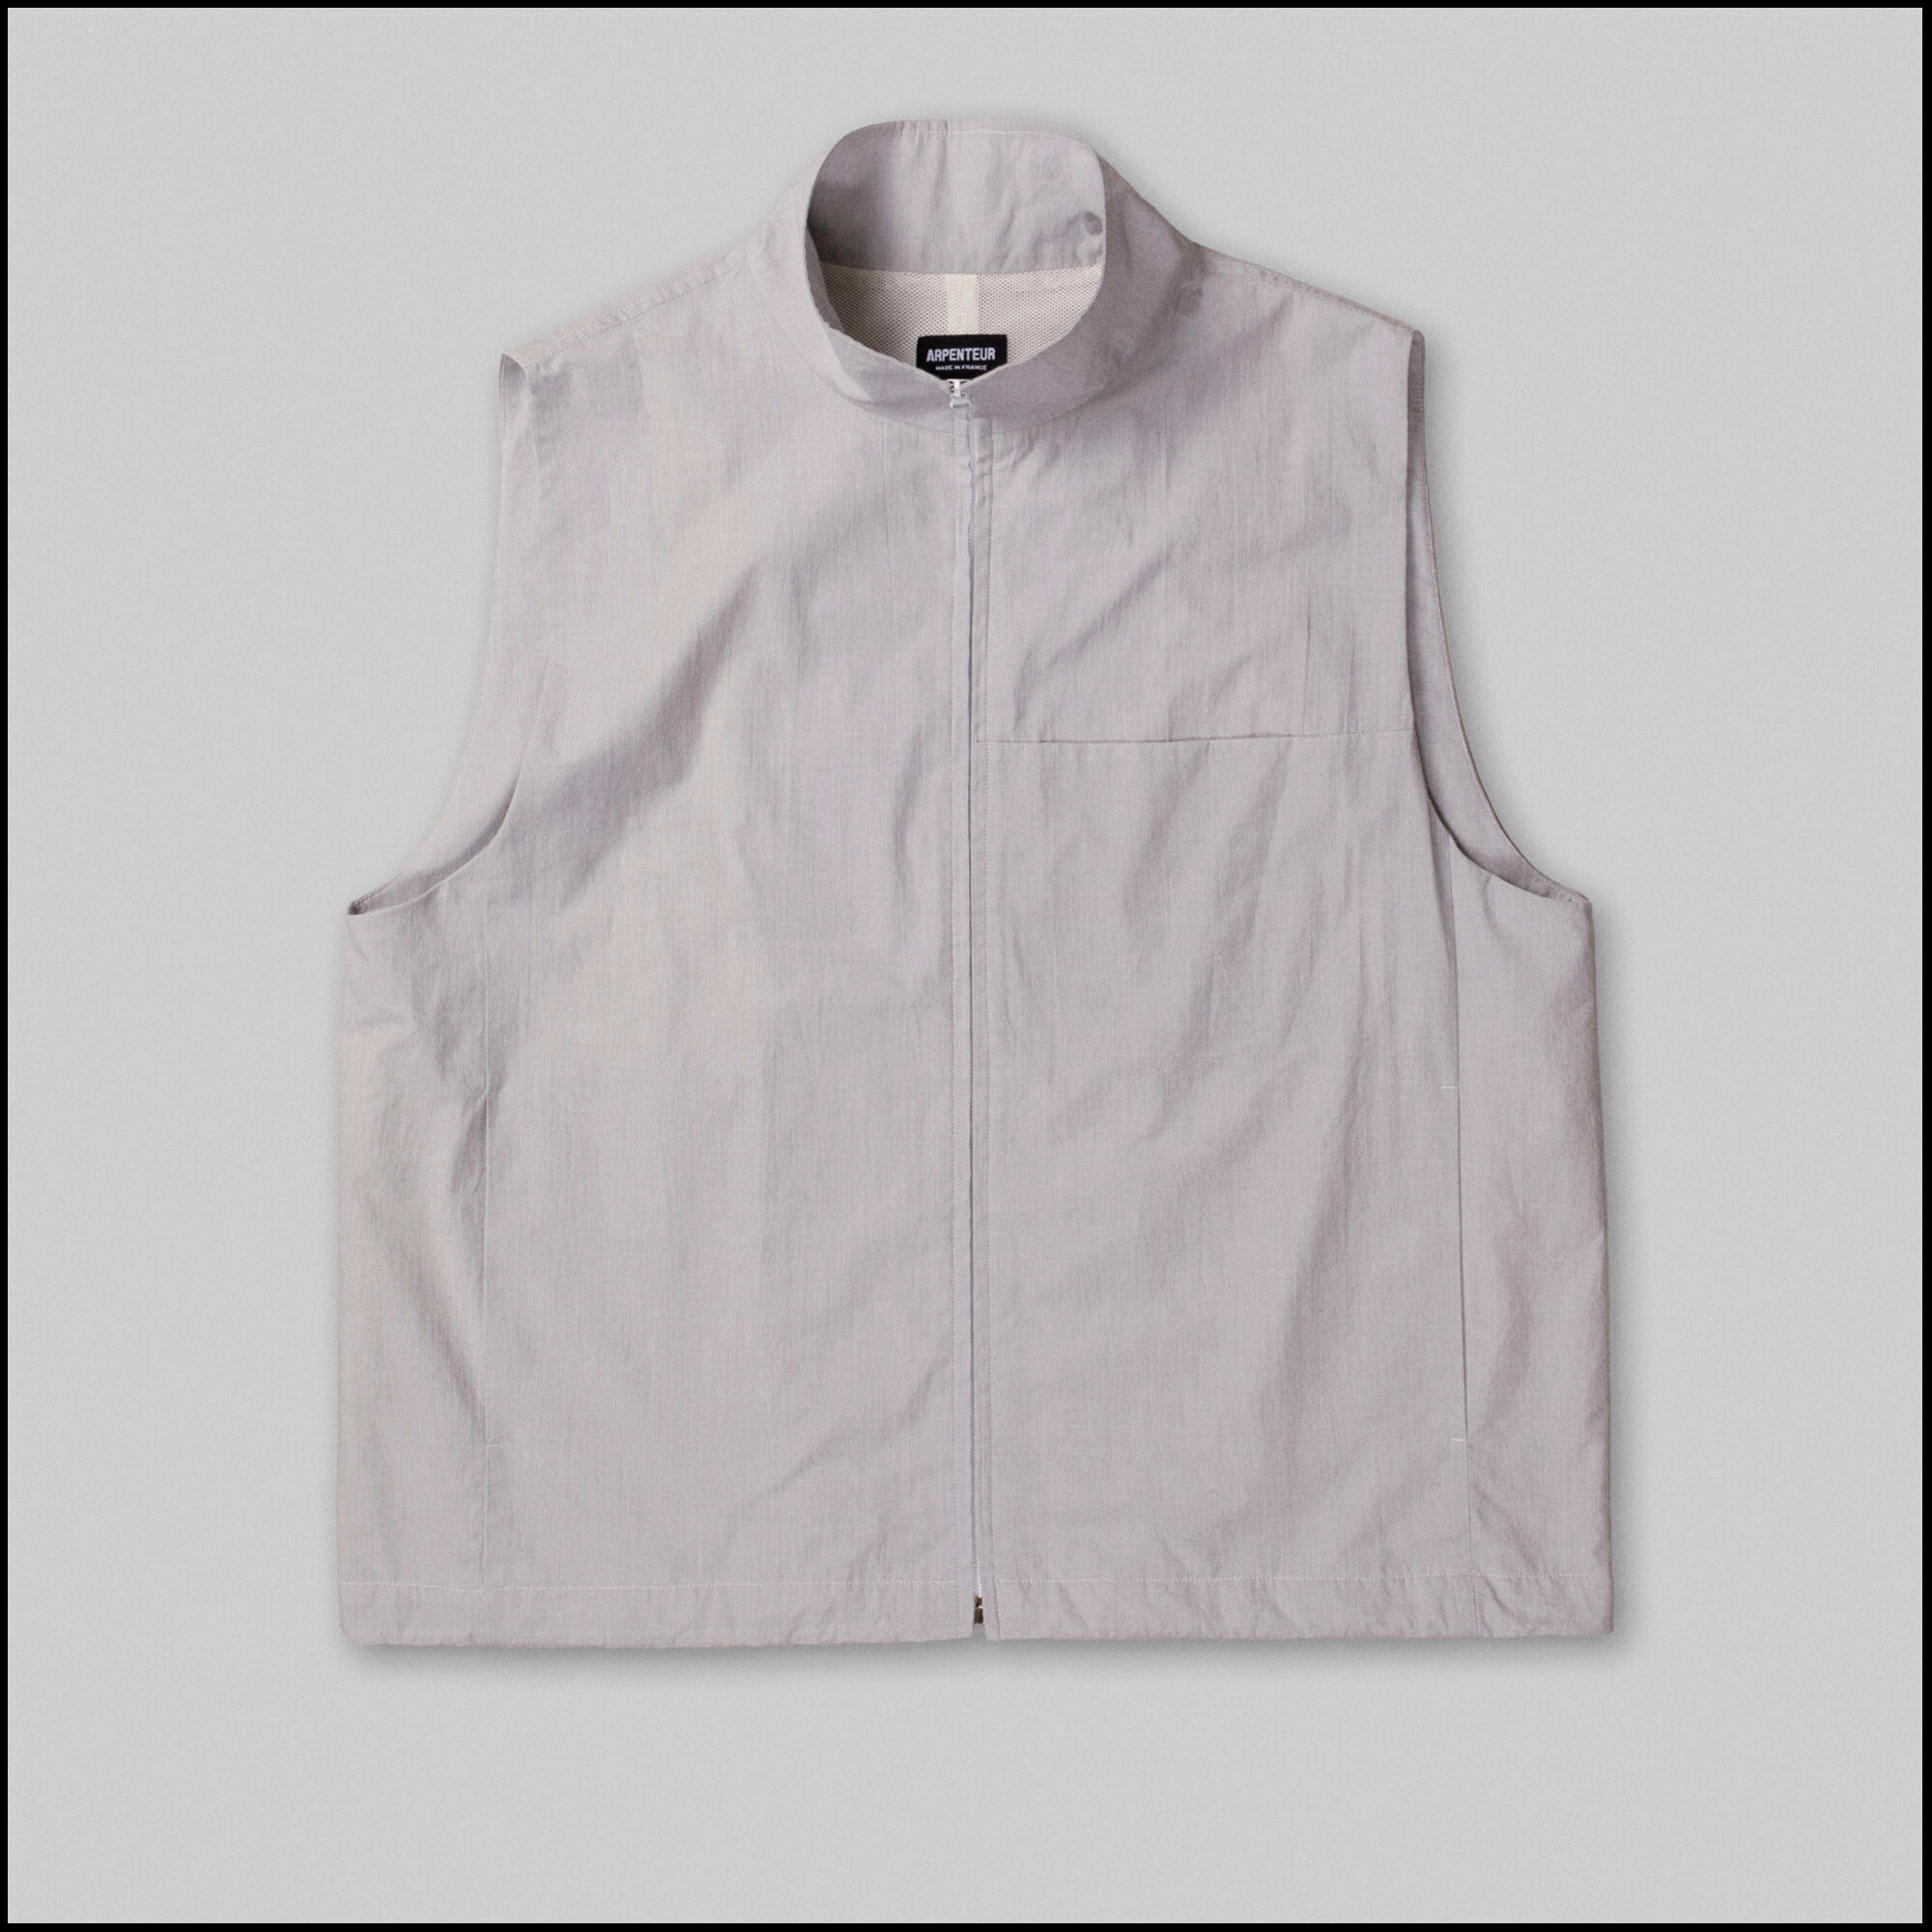 TRACK vest by Arpenteur, made of cotton mini seersucker in Grey color